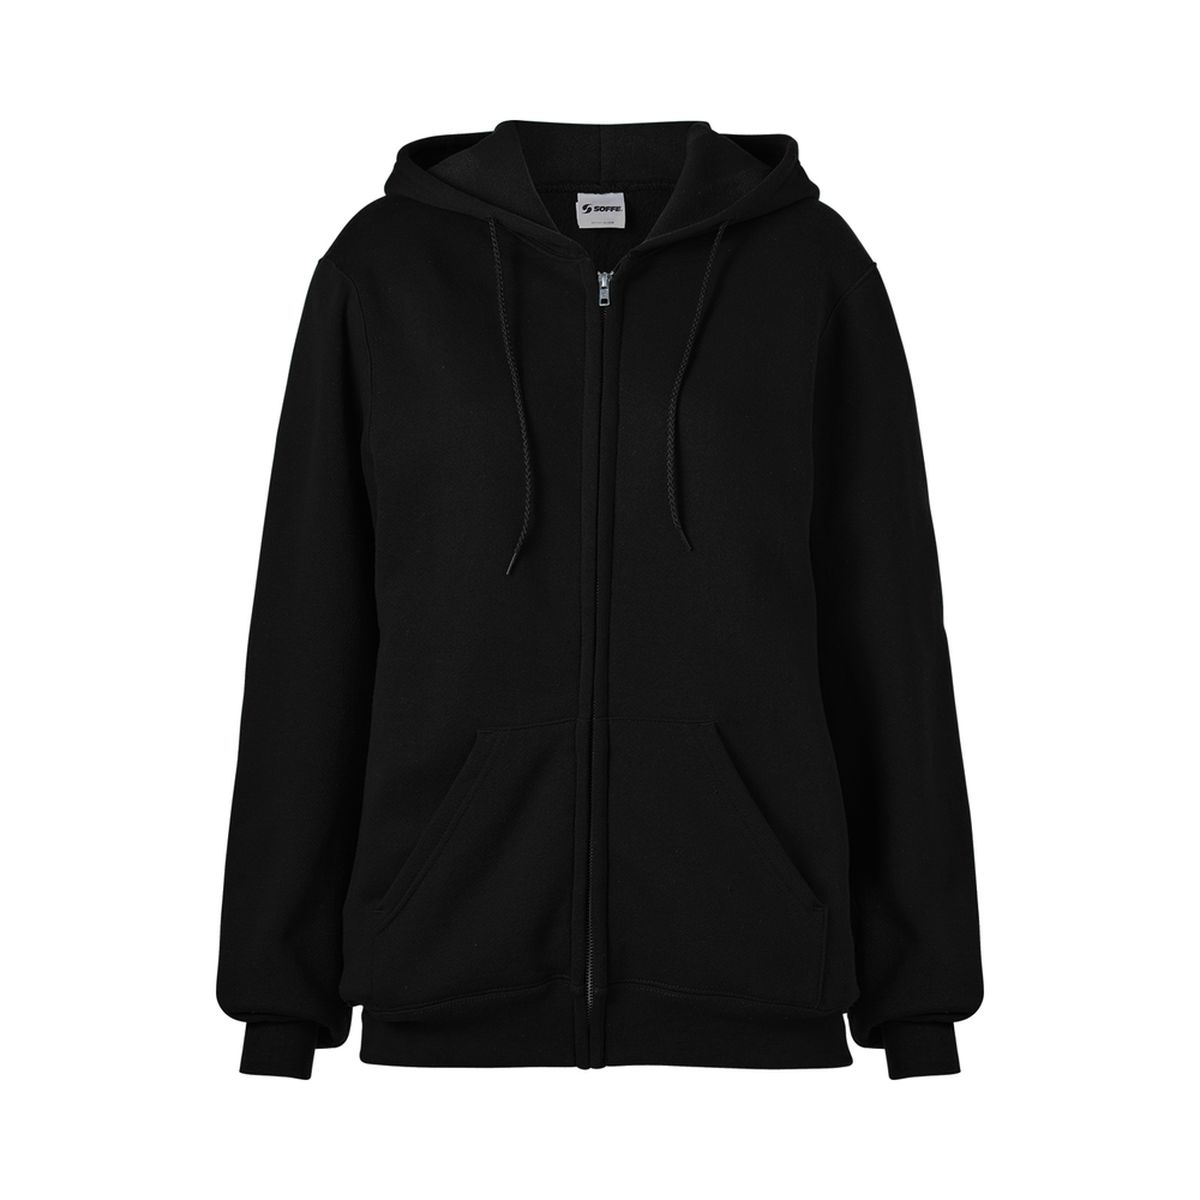 Soffe Adult Unisex Classic Zip Hooded Sweatshirt 9377 | eBay